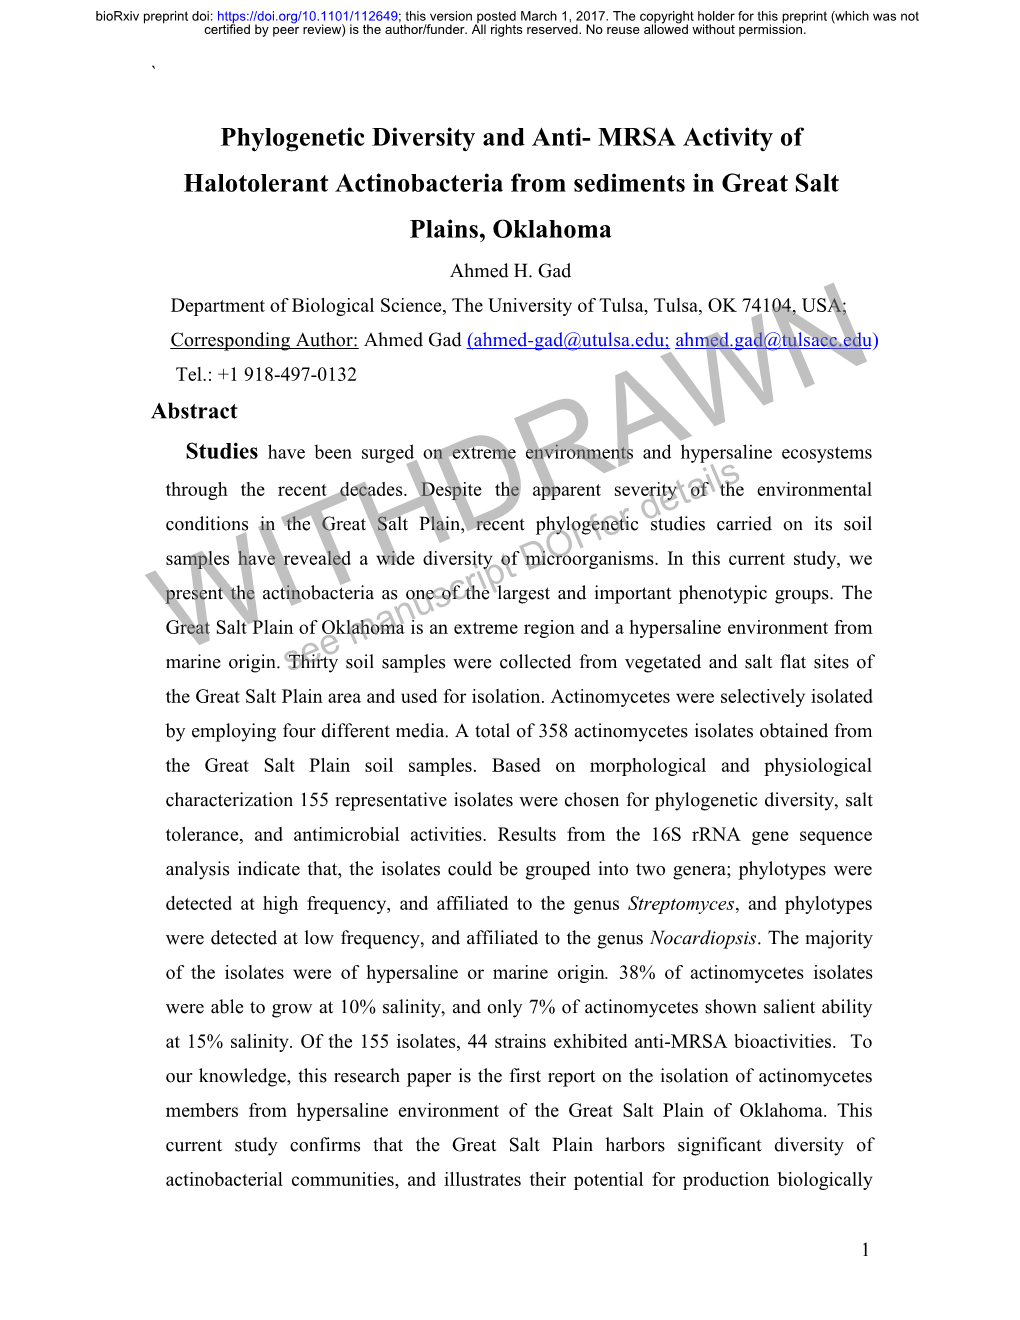 Phylogenetic Diversity and Anti-MRSA Activity of Halotolerant Actinobacteria from Sediments in Great Salt Plains, Oklahoma